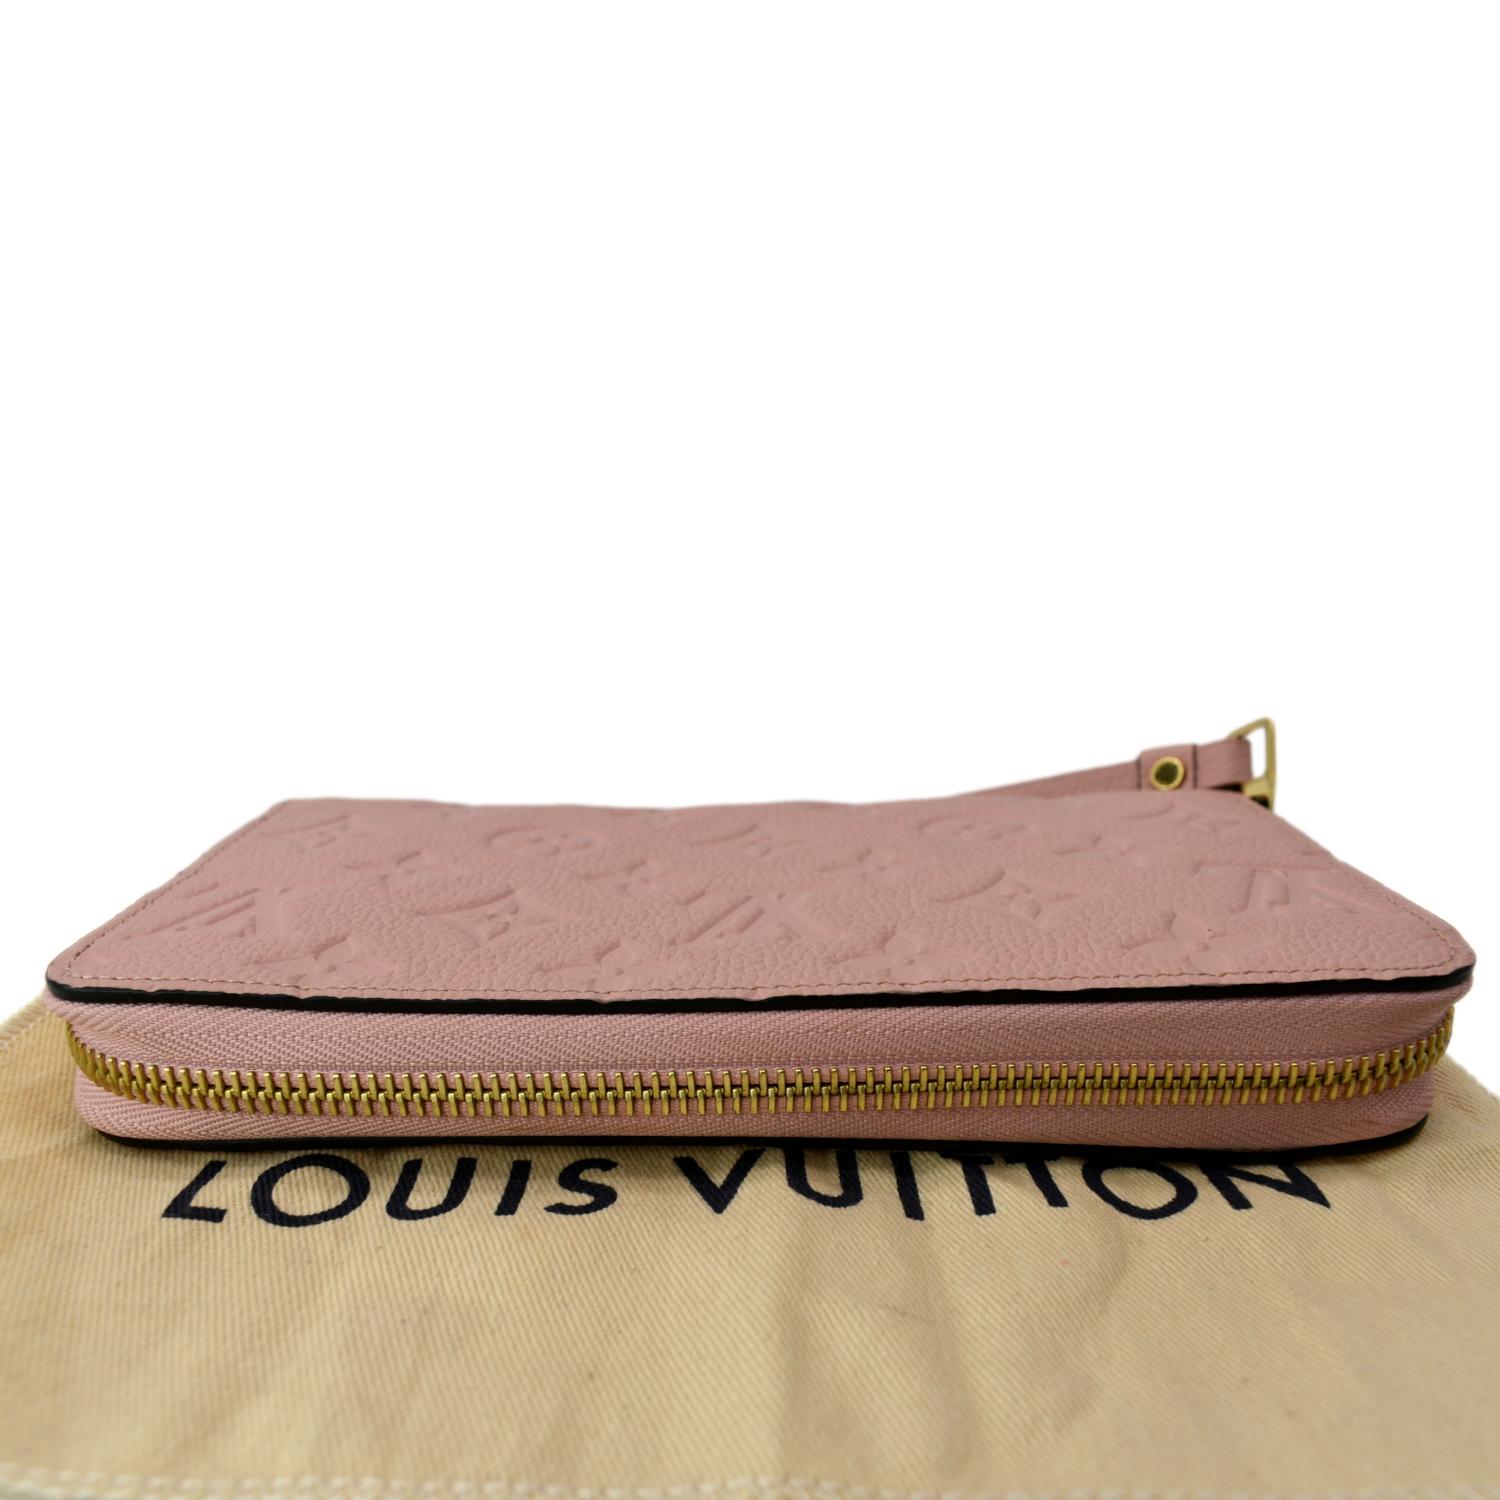 Louis-Vuitton-Monogram-Empreinte-Round-Wallet-Rose-Poudre-M64090